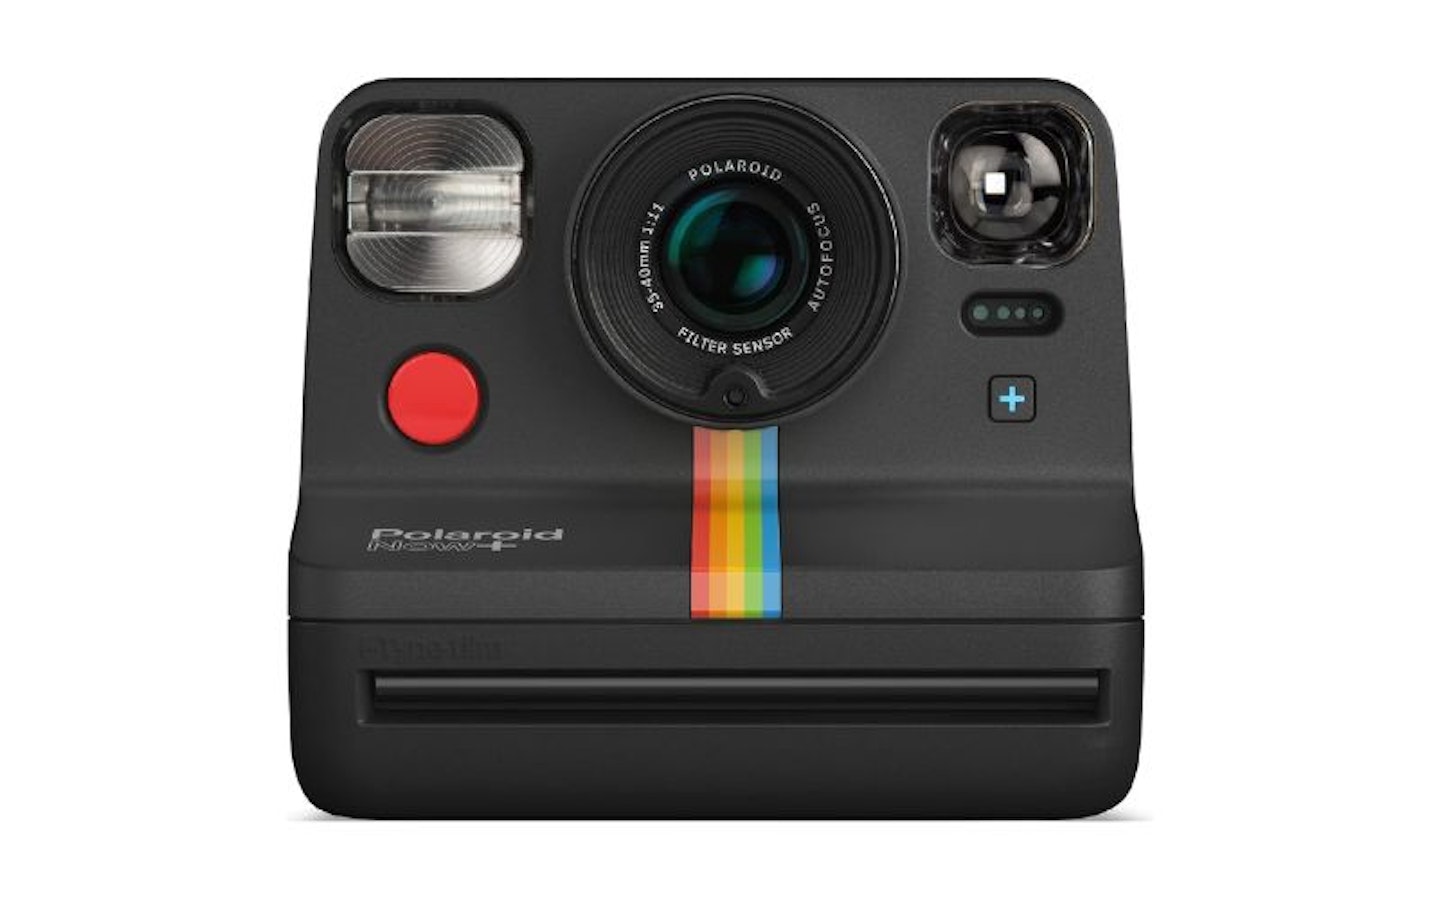 Polaroid Now+ Instant Camera